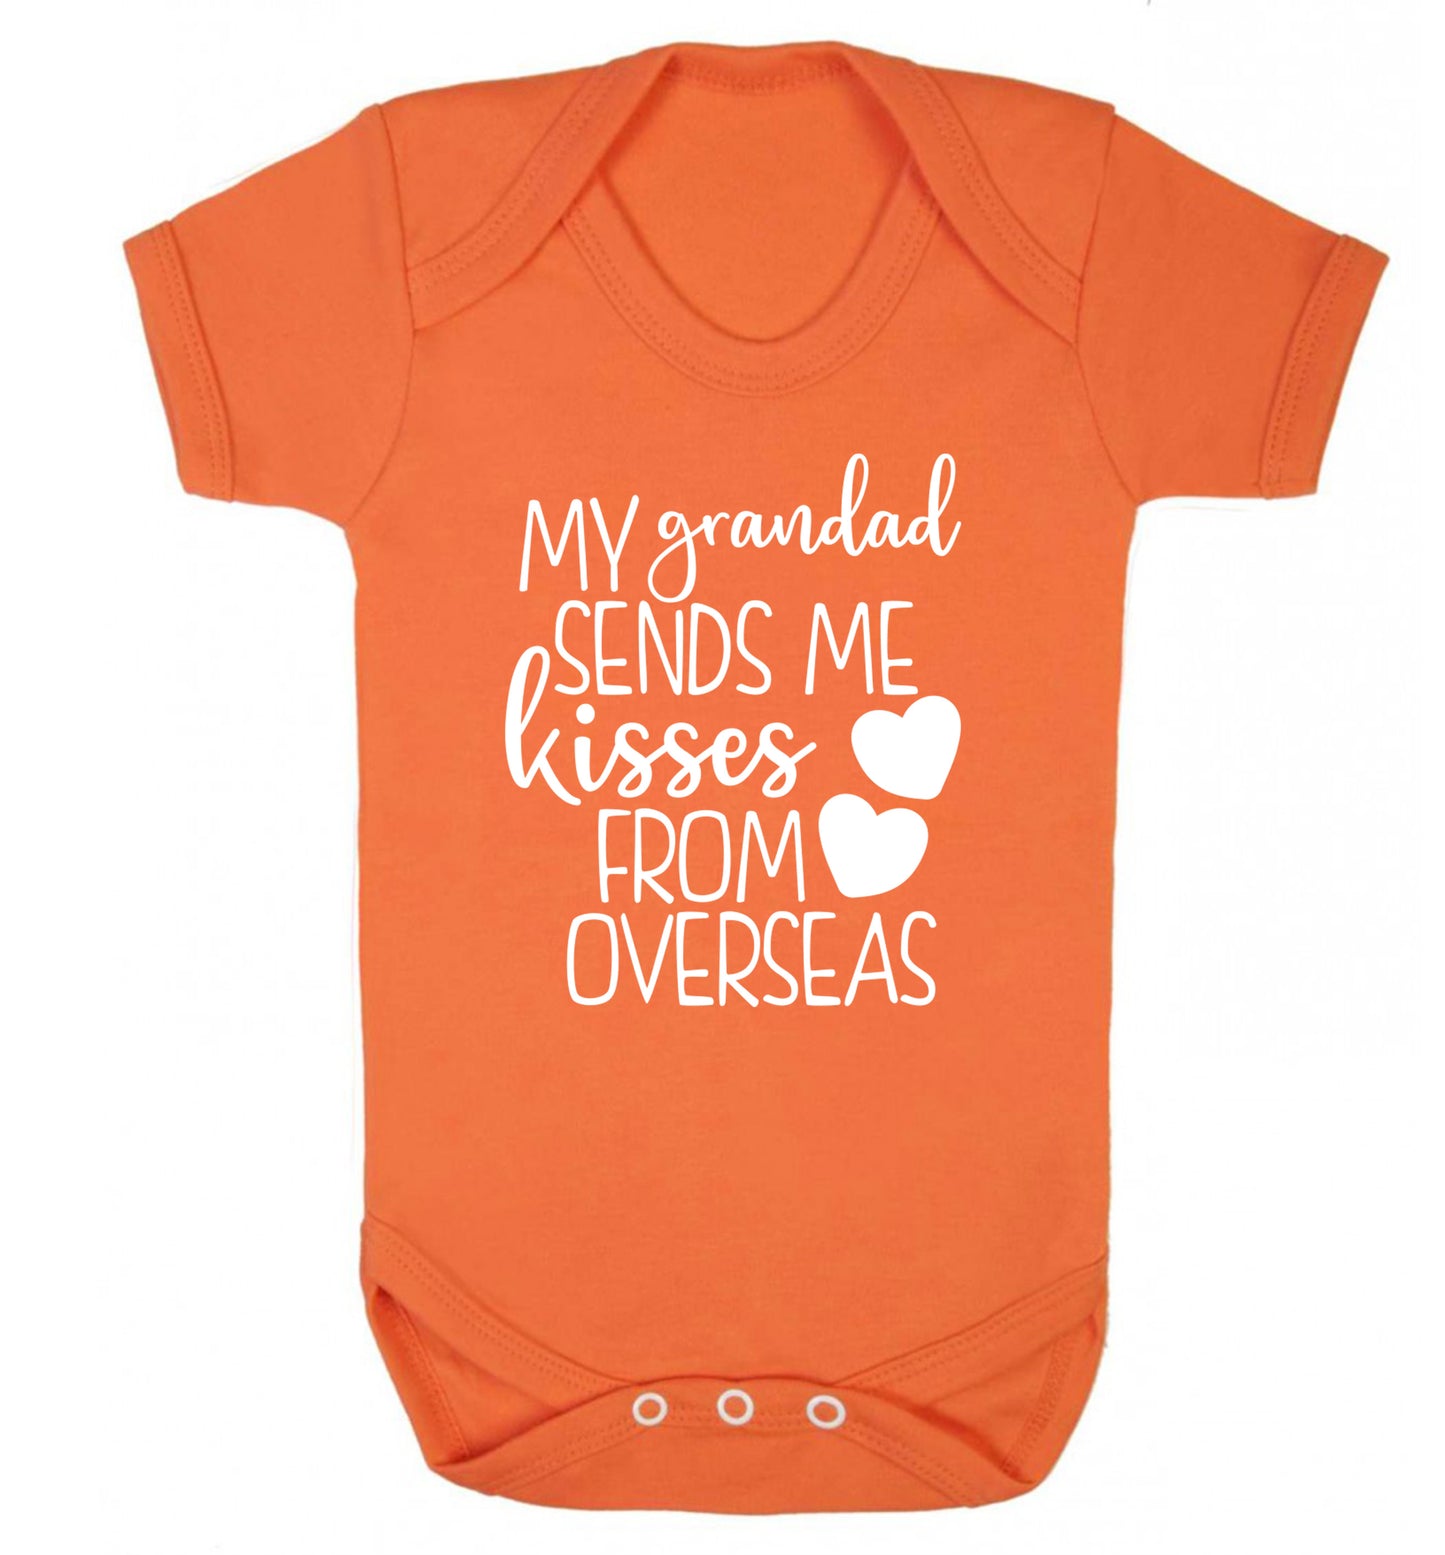 My Grandad sends me kisses from overseas Baby Vest orange 18-24 months